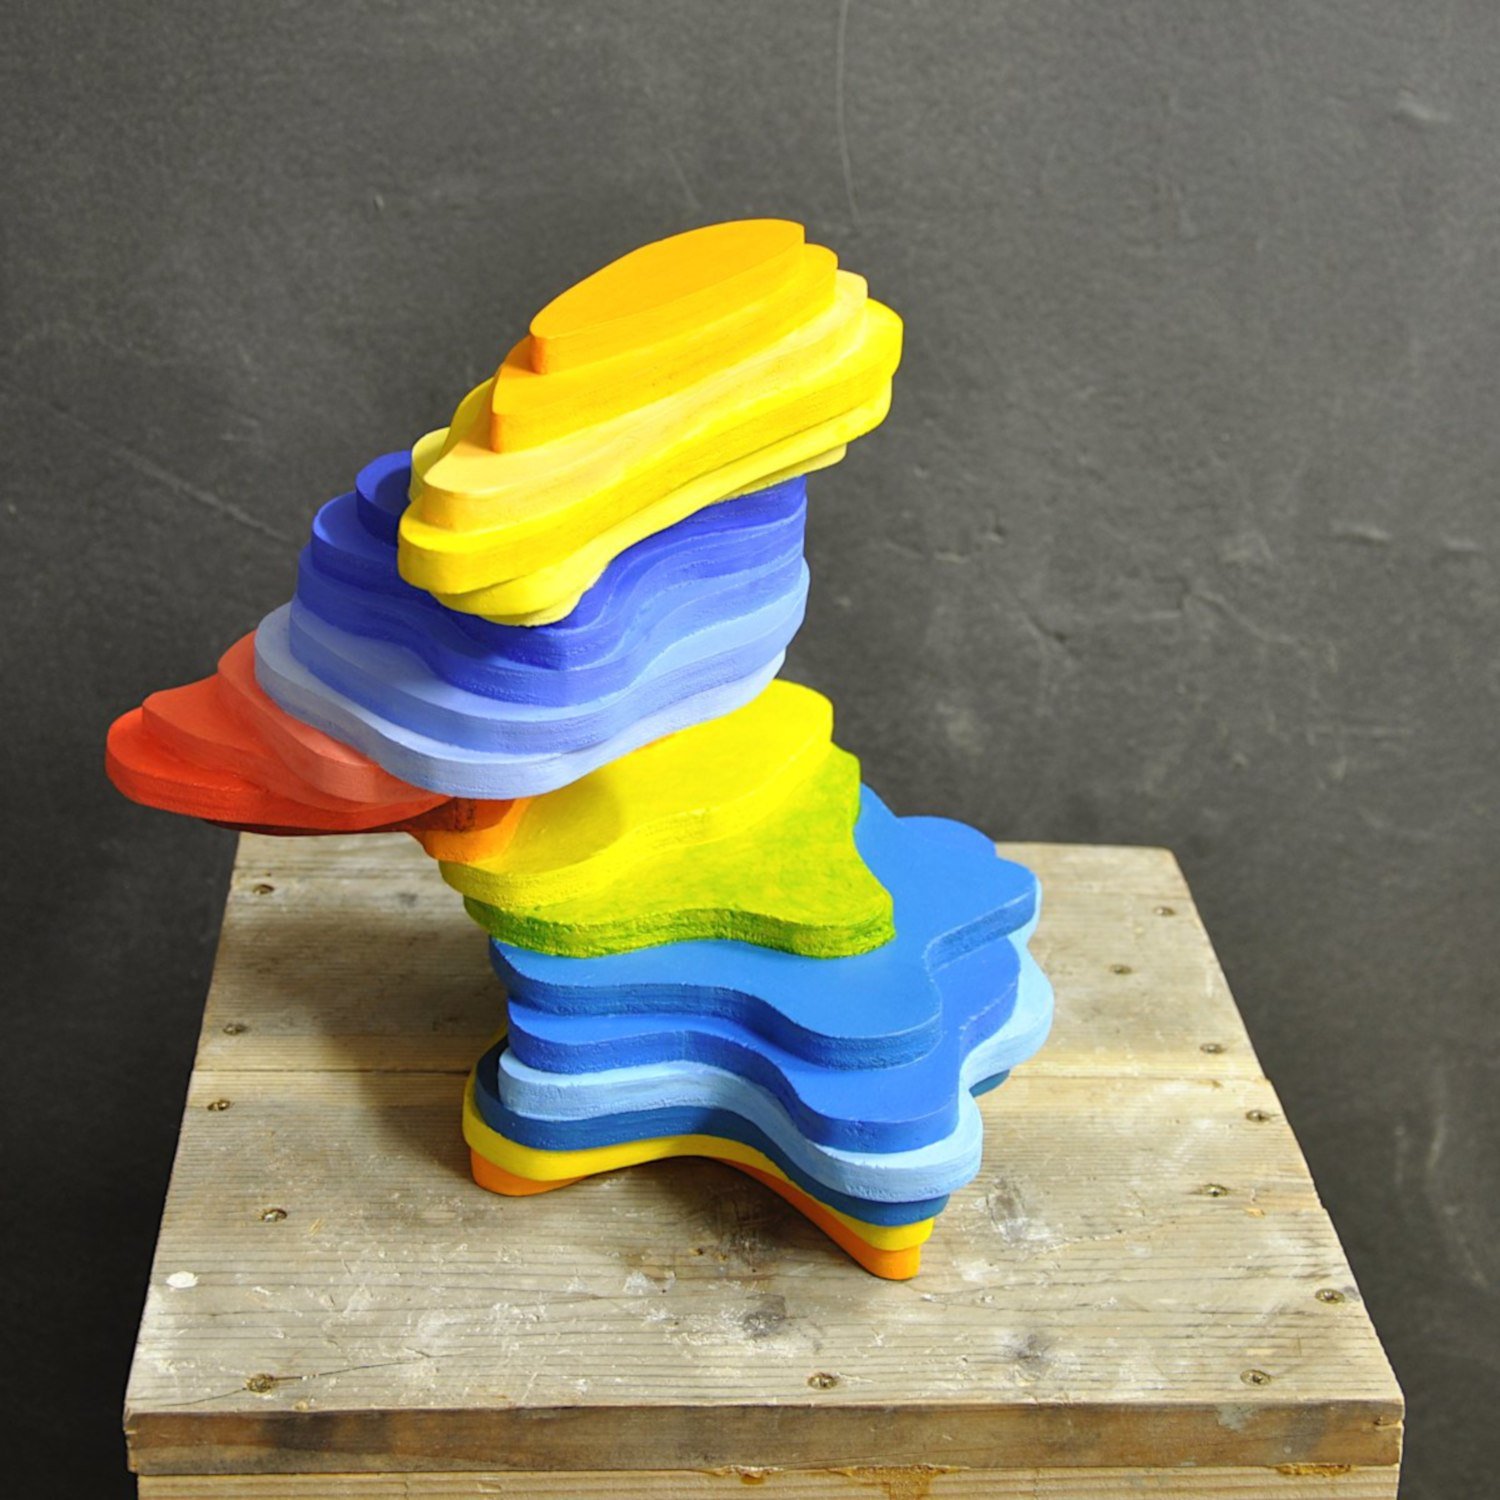 Sinfonia di primavera - wooden abstract sculpture